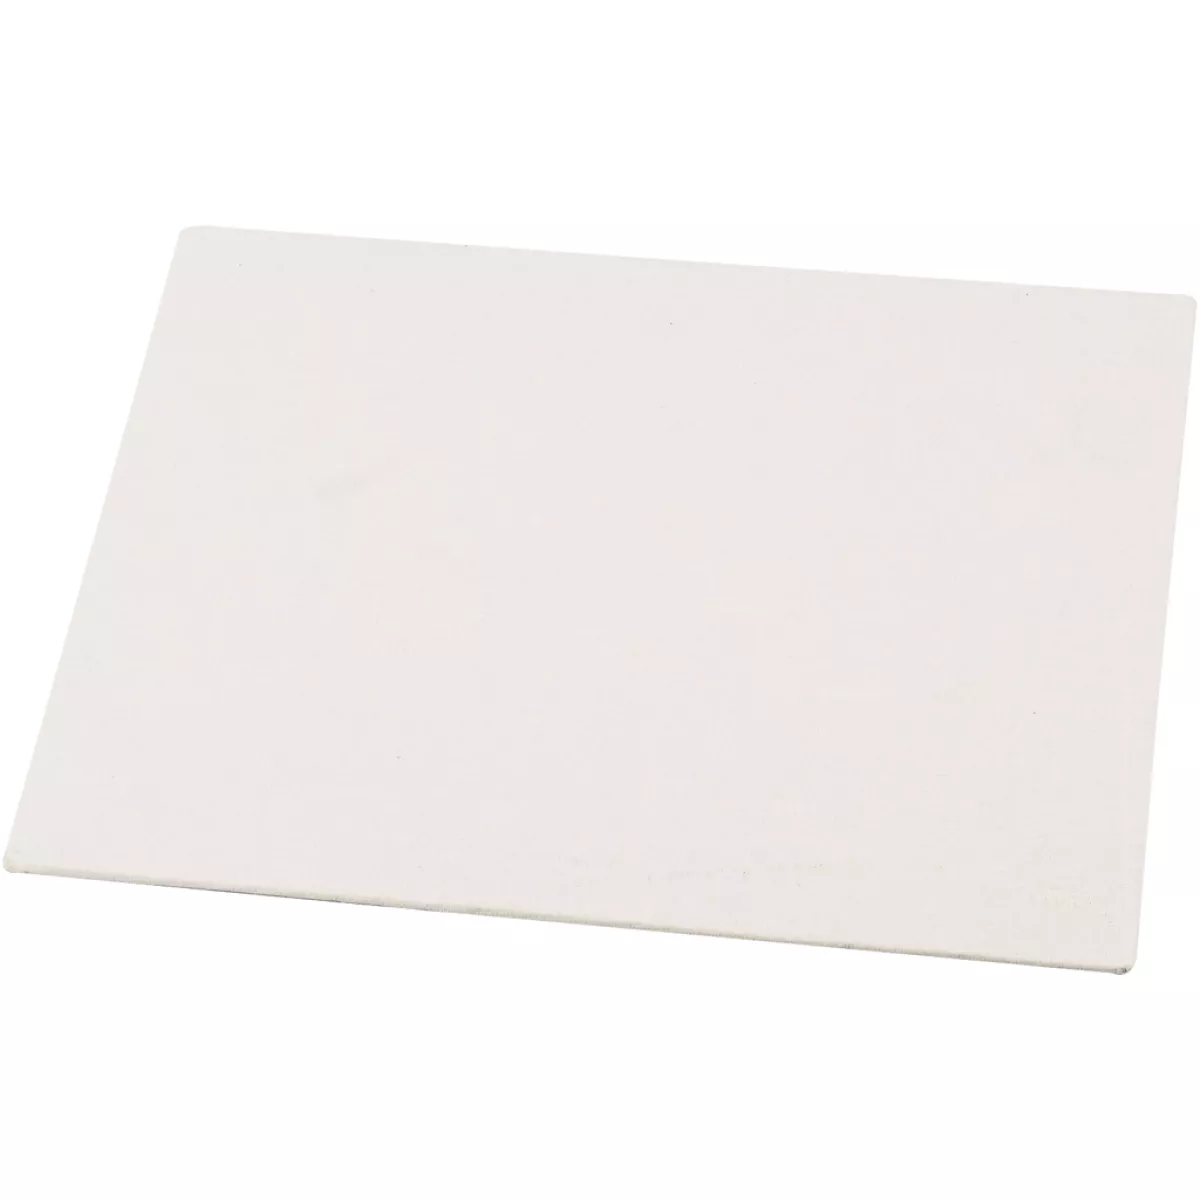 #1 - Malerplade, A5, str. 14,8x21 cm, 280 g, hvid, 1 stk.